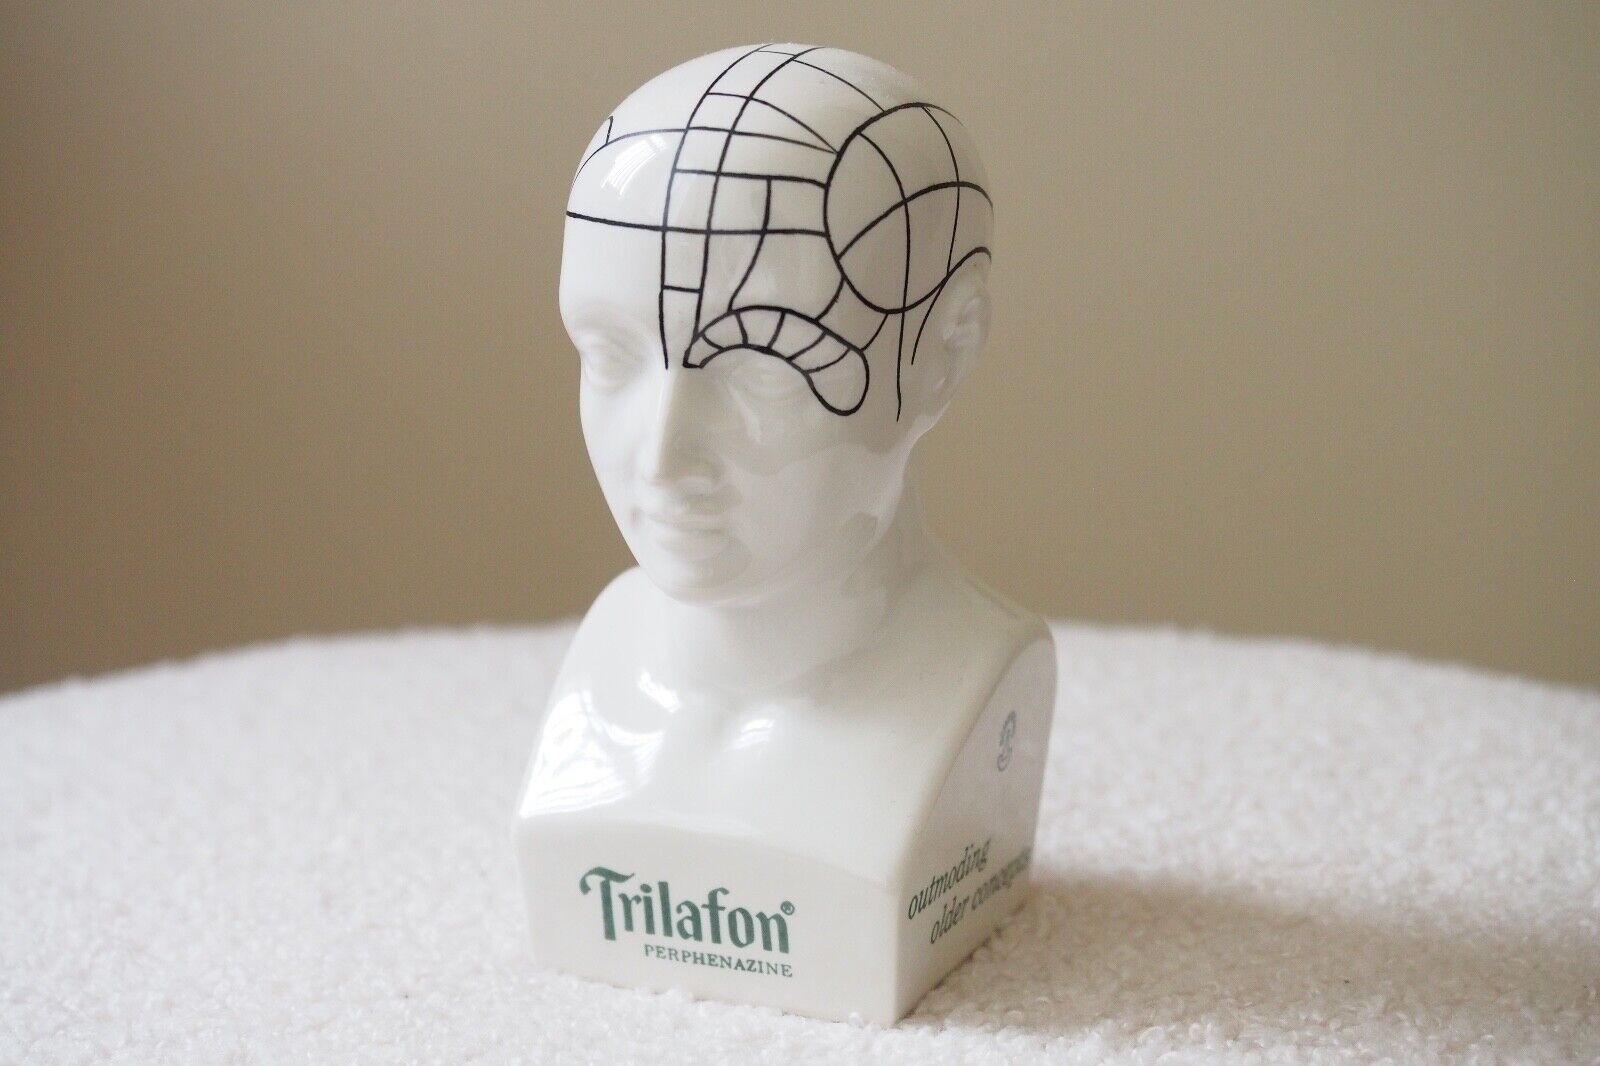 Vintage Porcelain Schering Trilafon Full-Range Tranquilizer Bust Phrenology Head